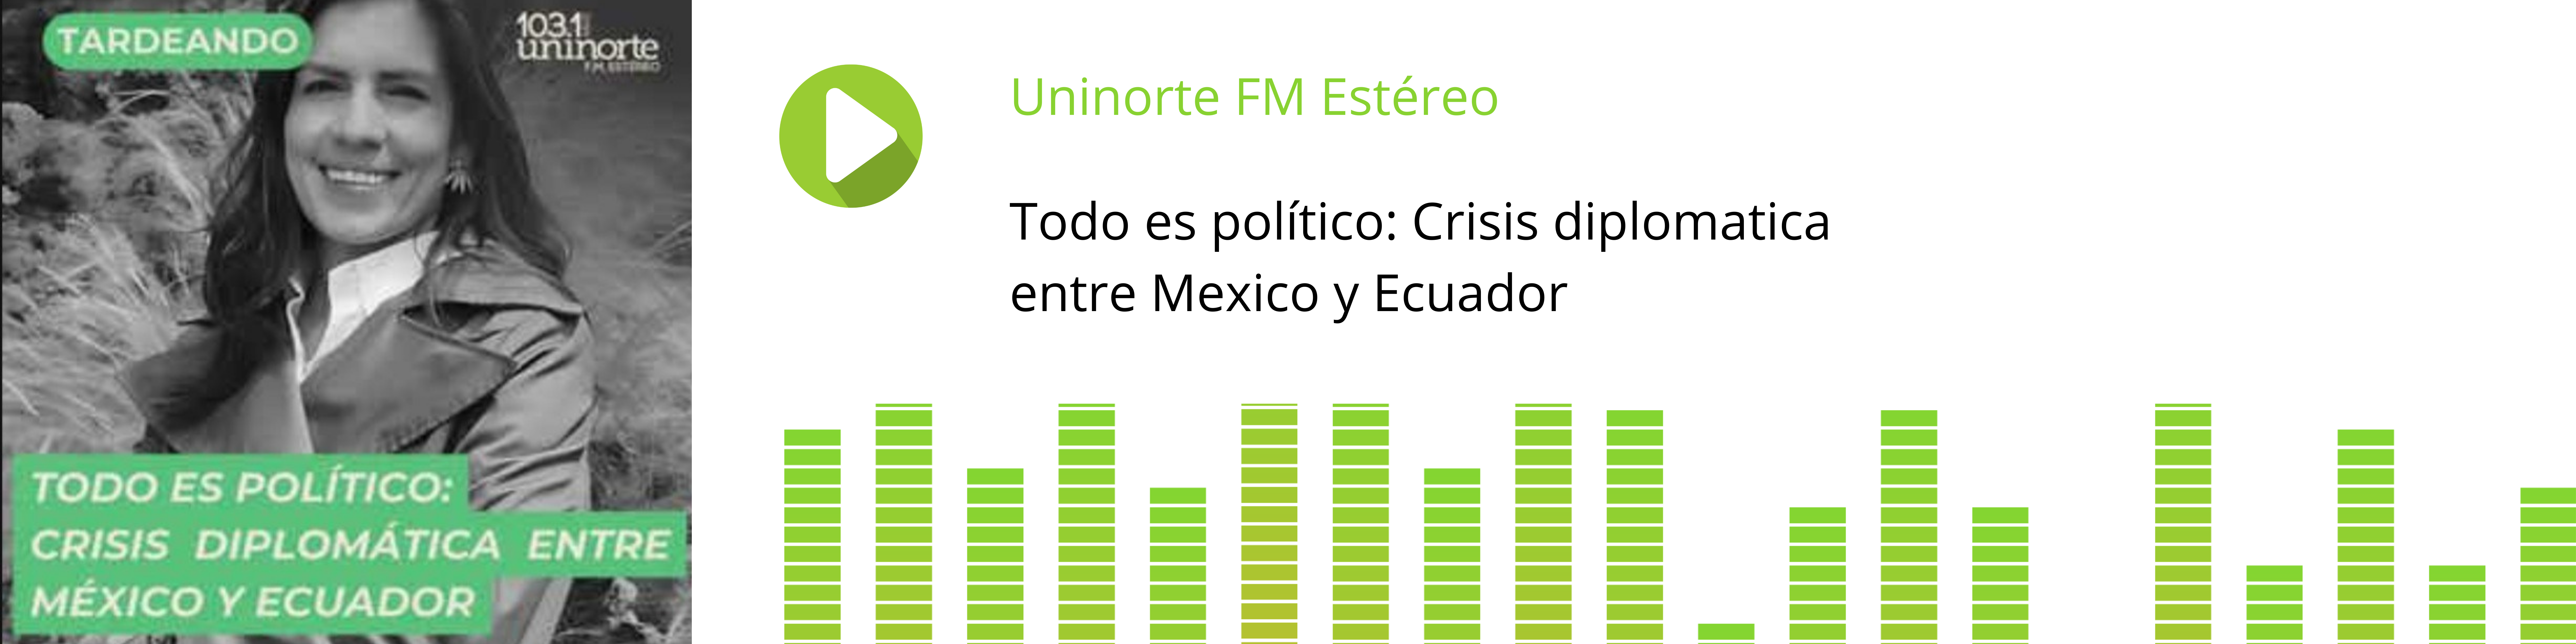 crisis diplomatica mexico y ecuador